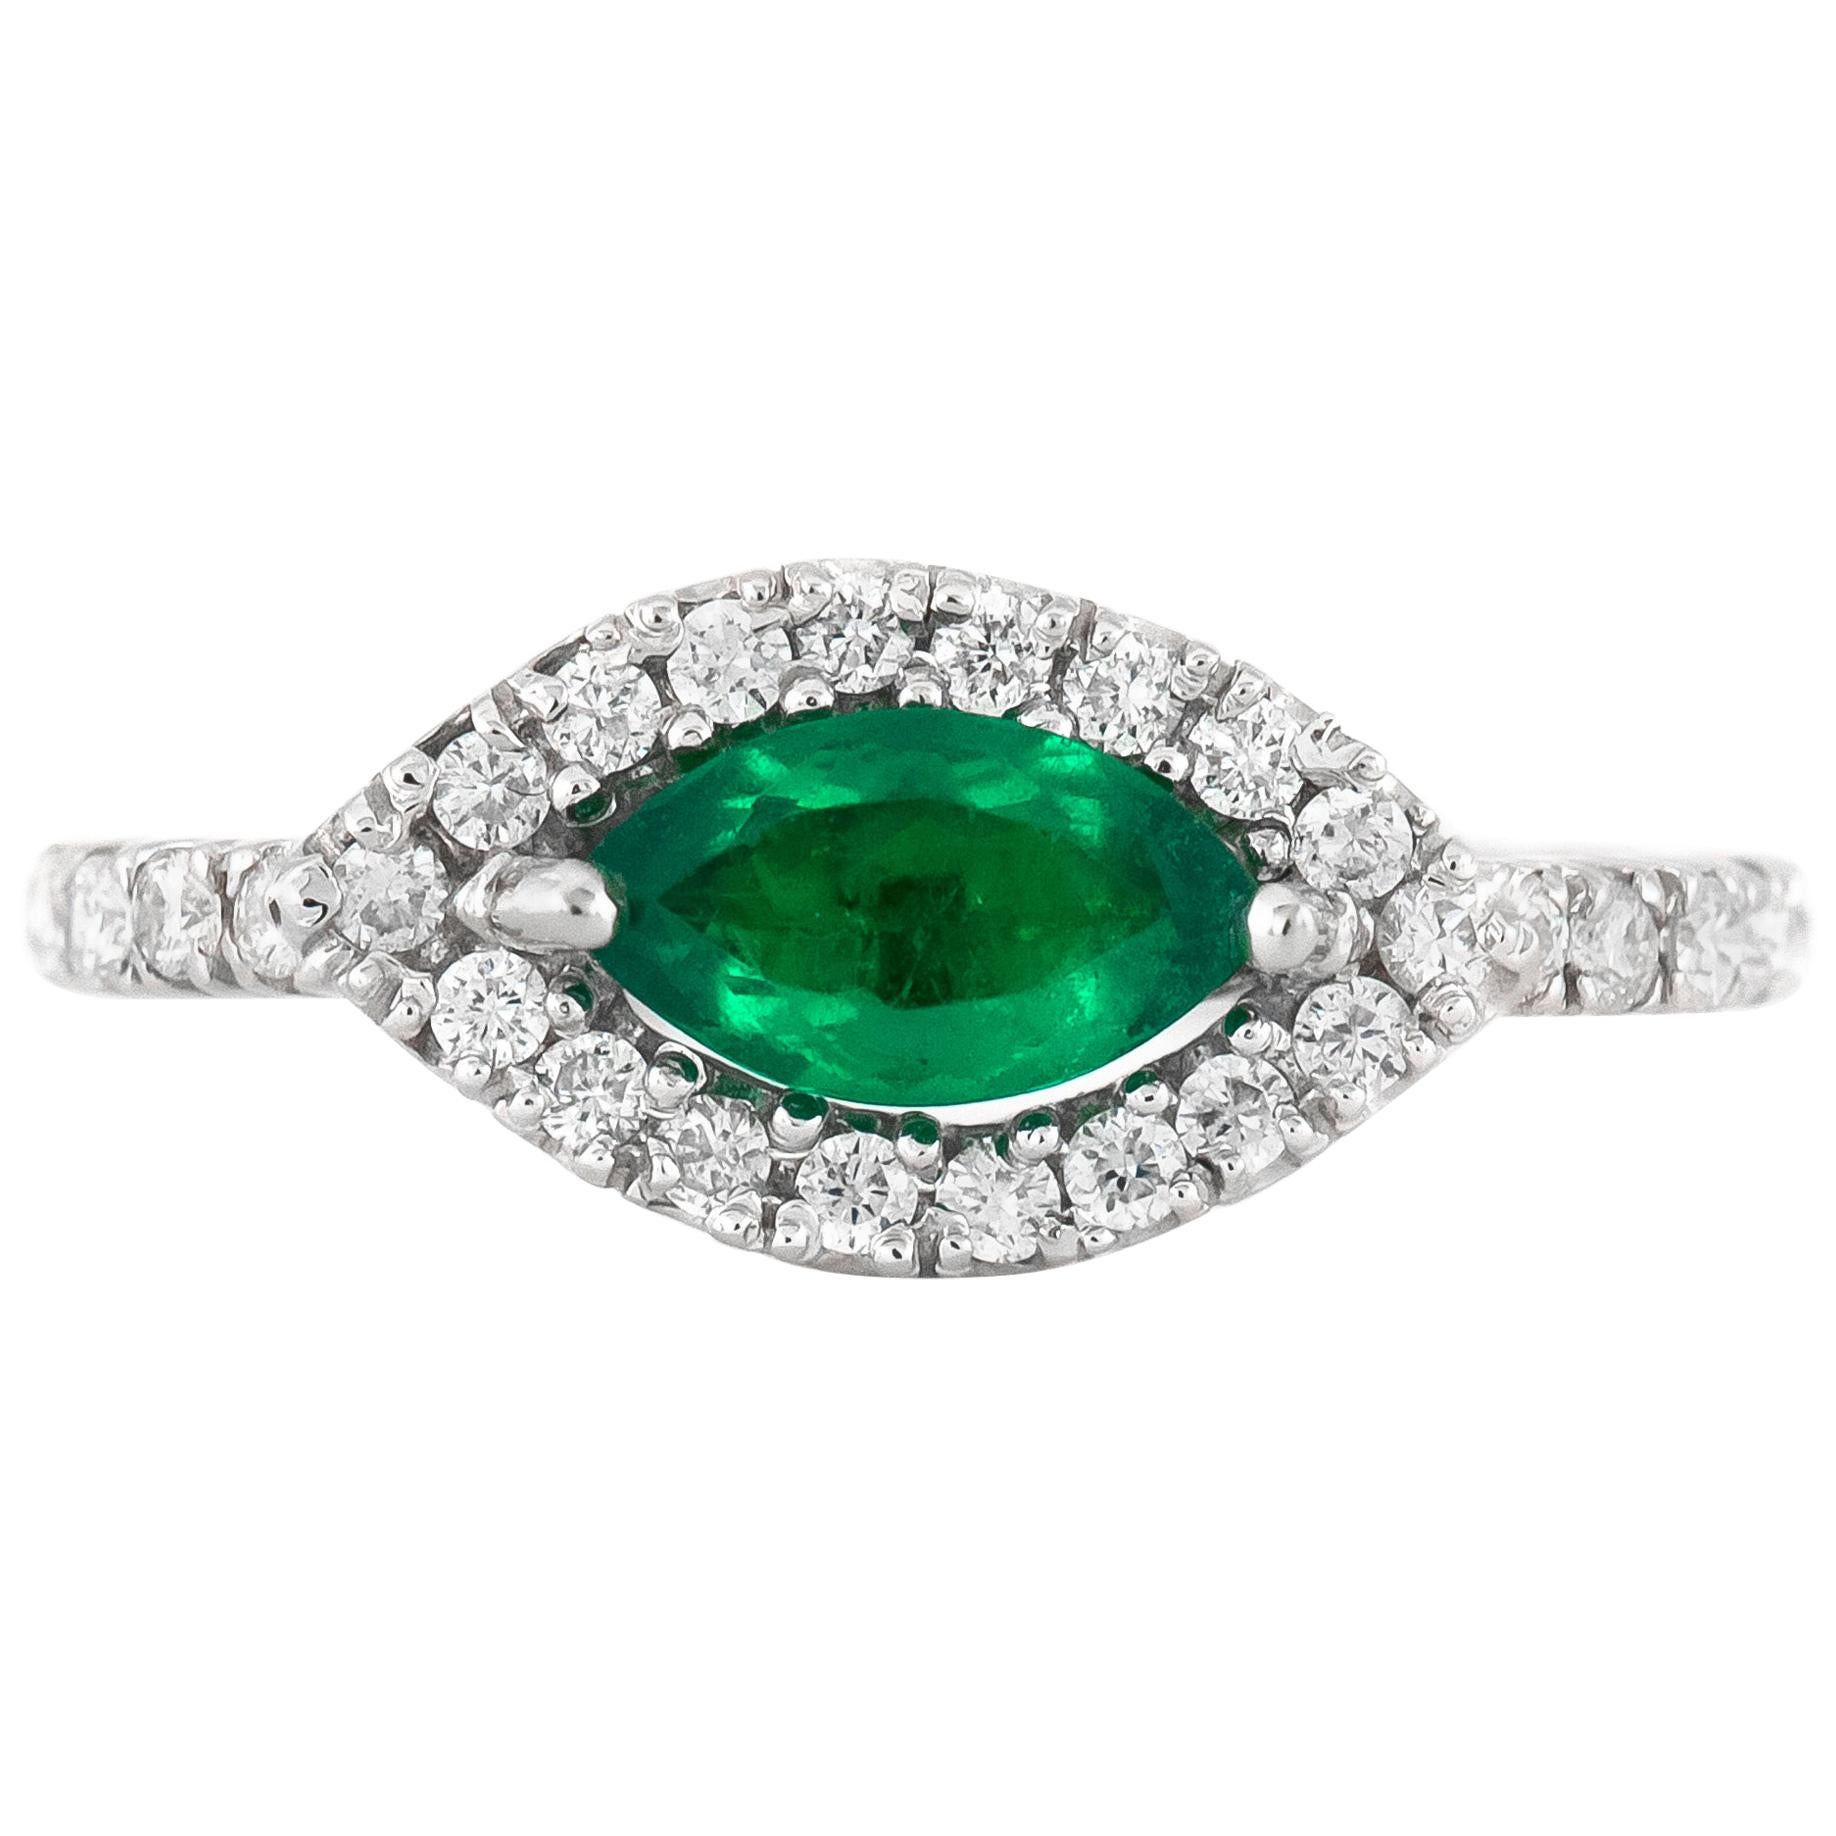 Eye Style Emerald with Diamonds Ring